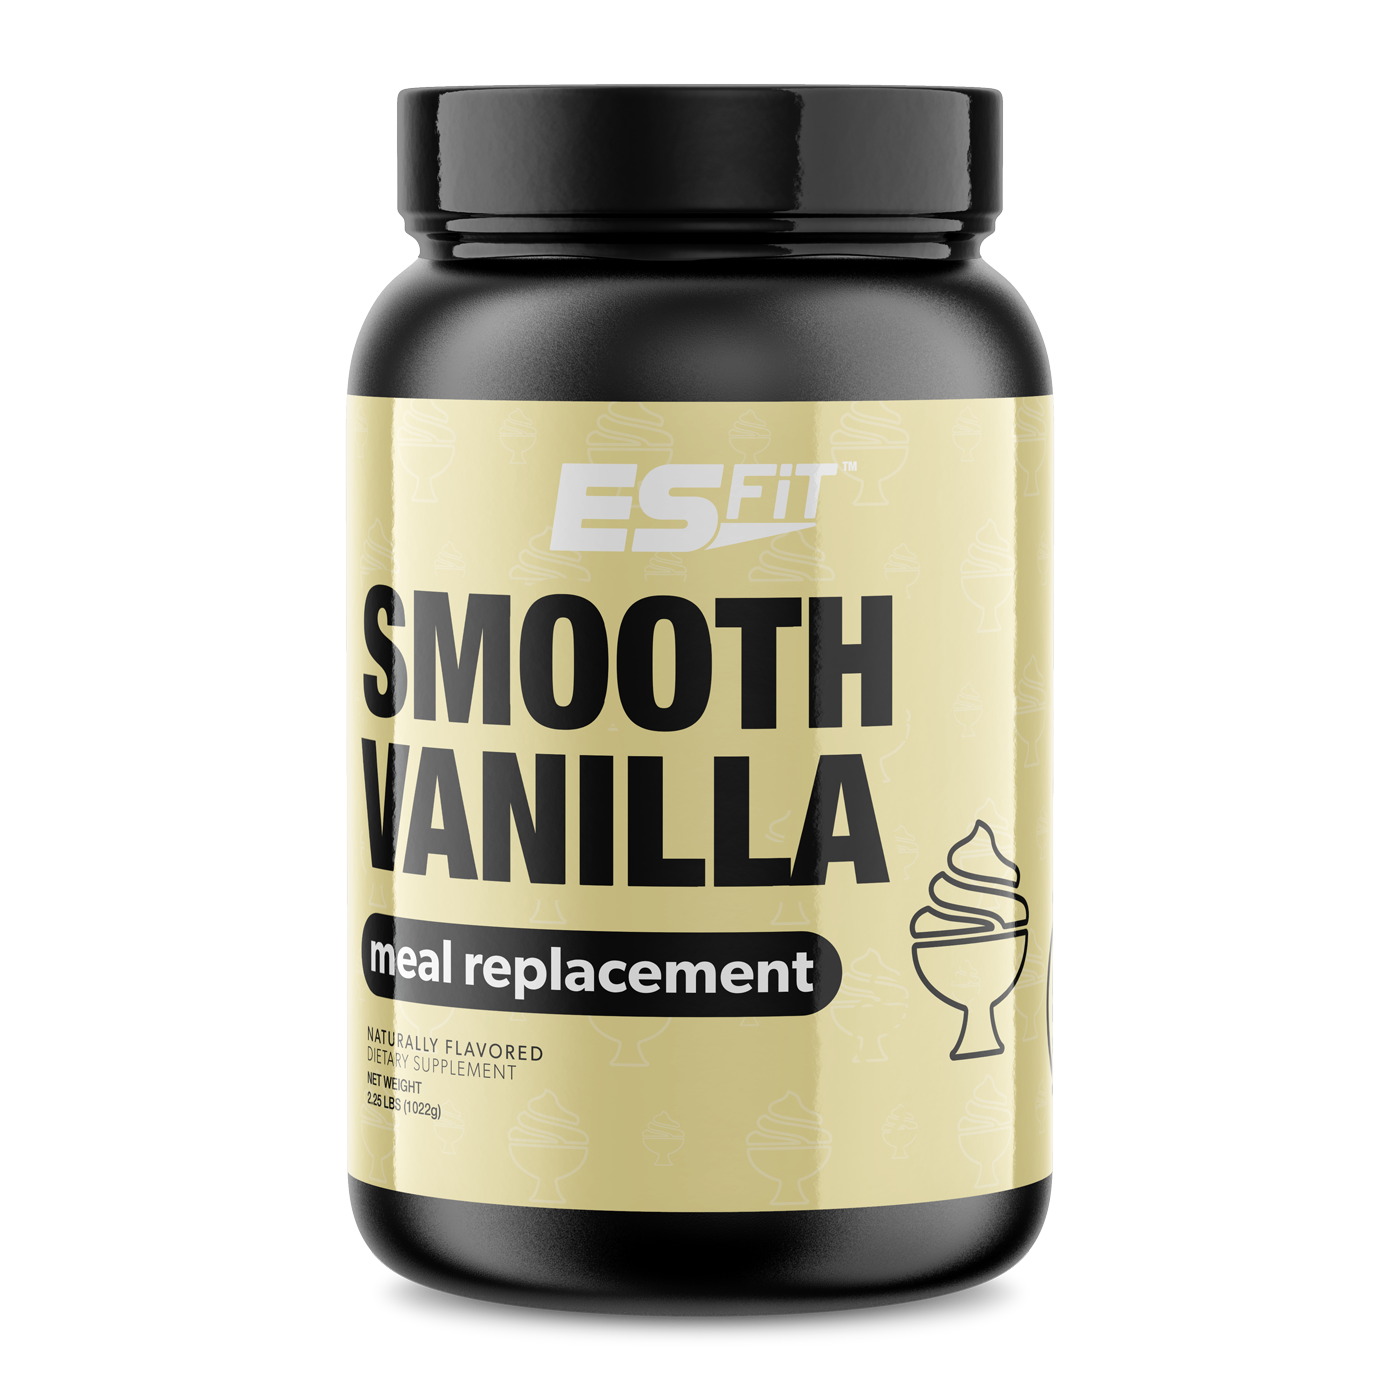 Complete MR- Smooth Vanilla